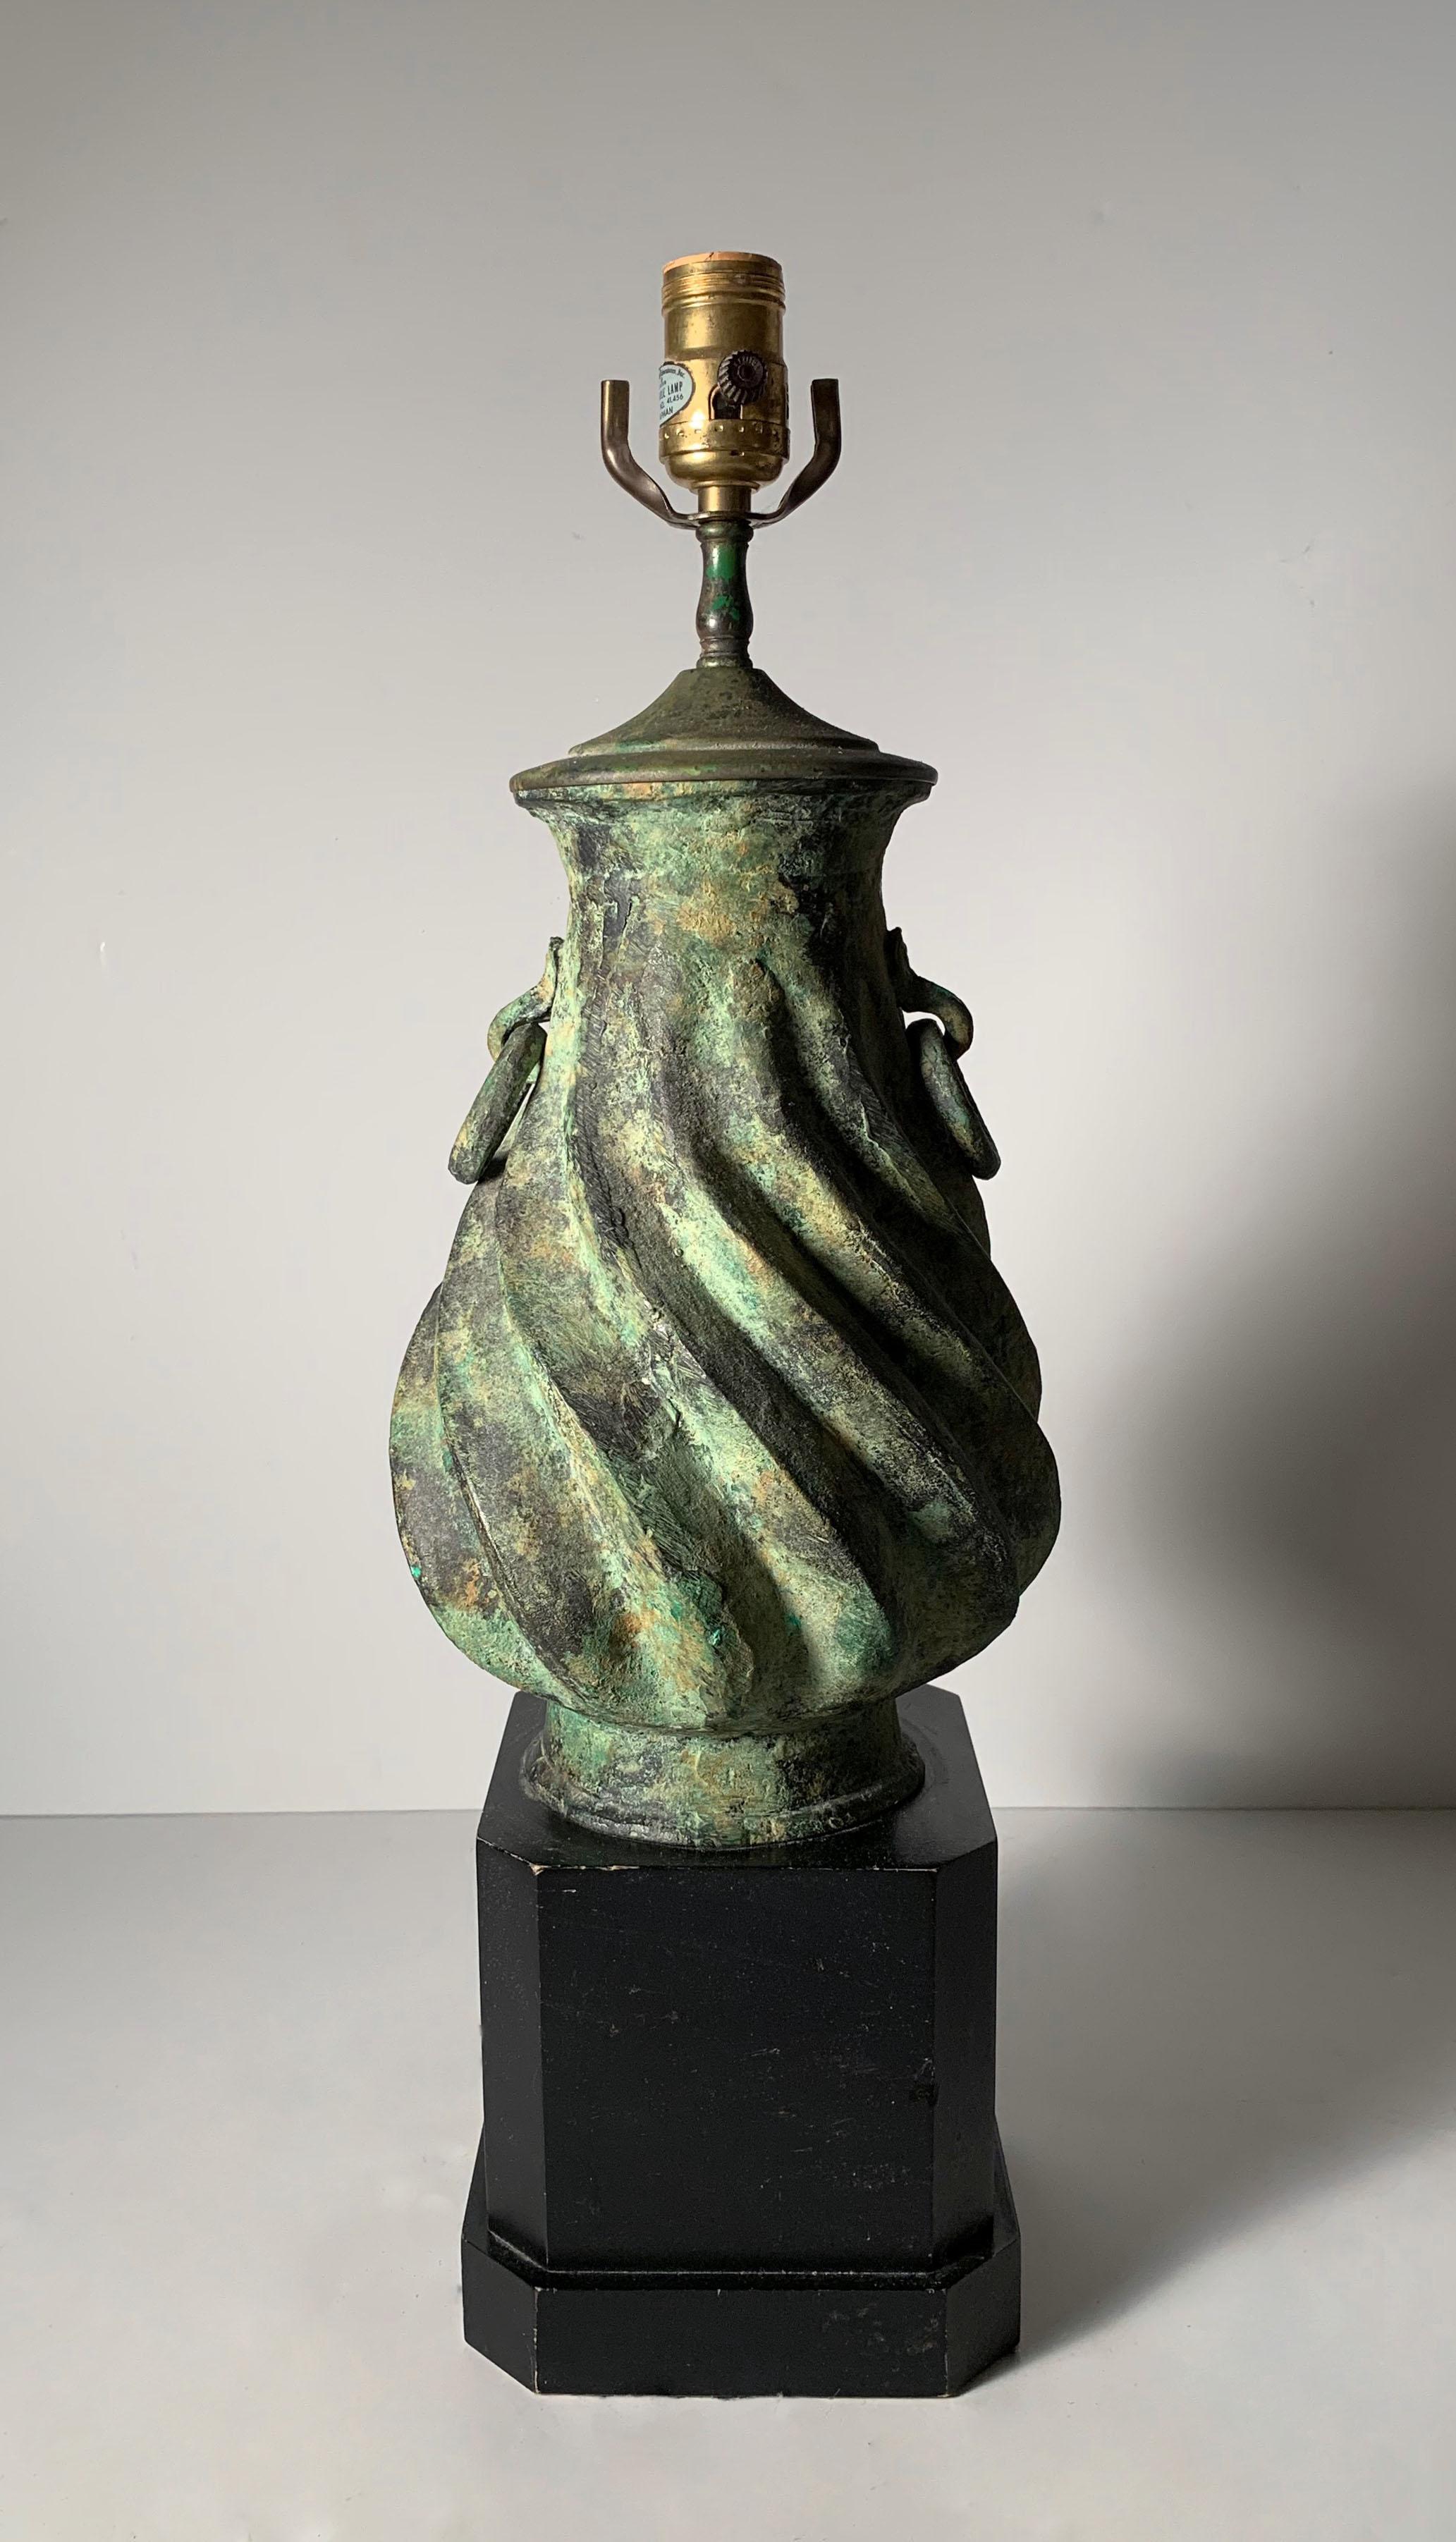 Vintage chapman oriental bronze urn table lamp with verdigris patina finish.